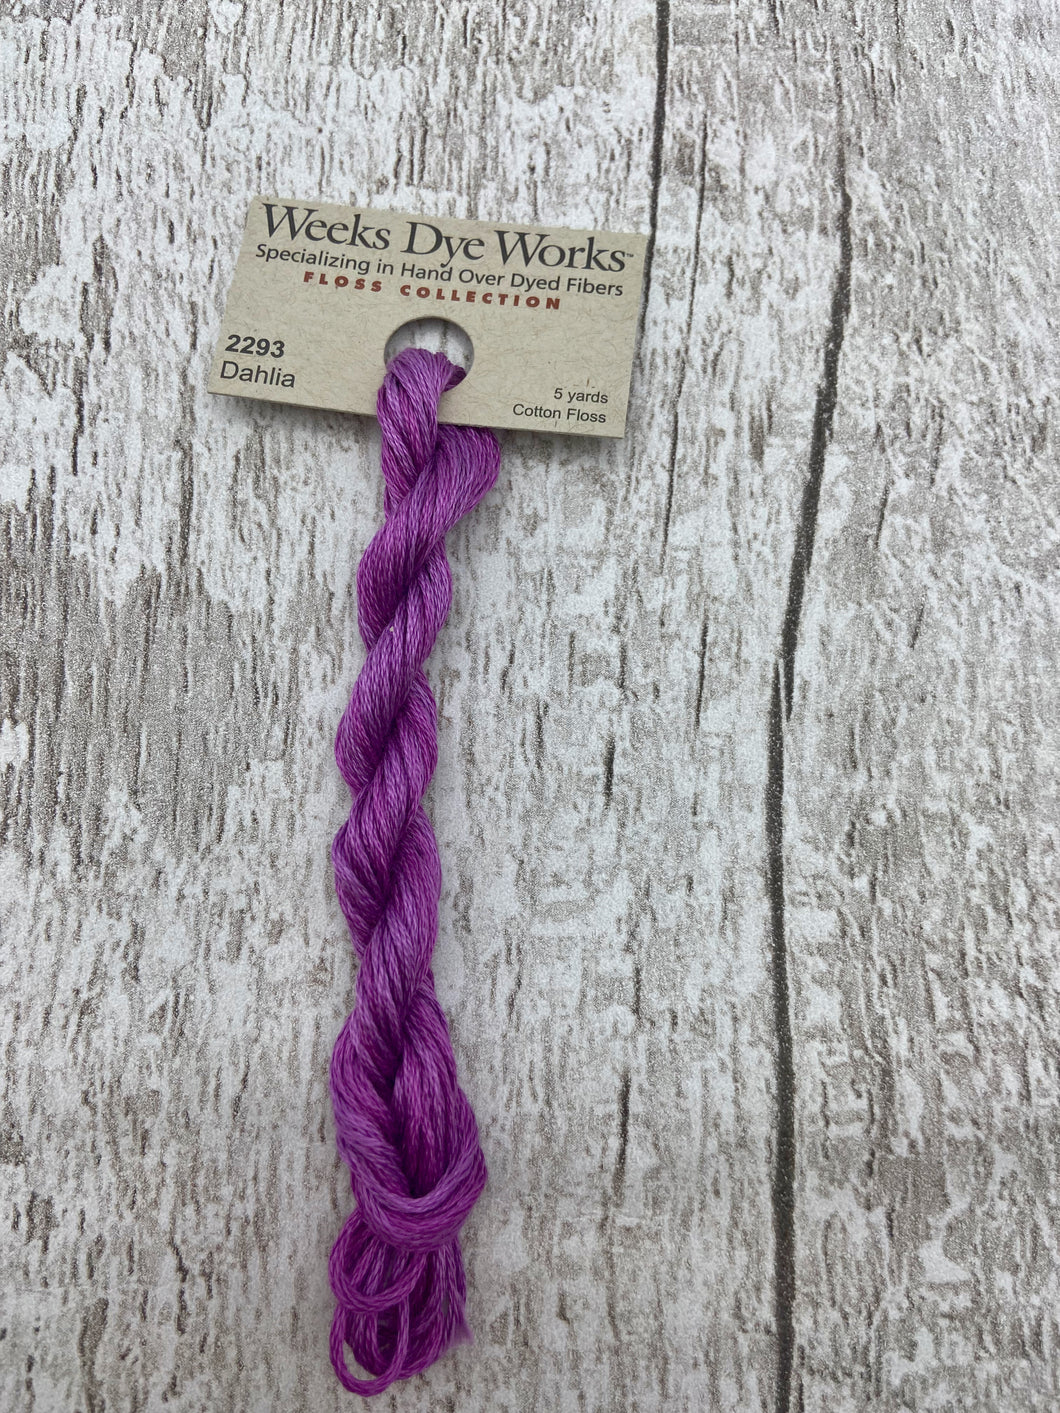 Dahlia (#2293), Weeks Dye Works 6-strand cotton floss